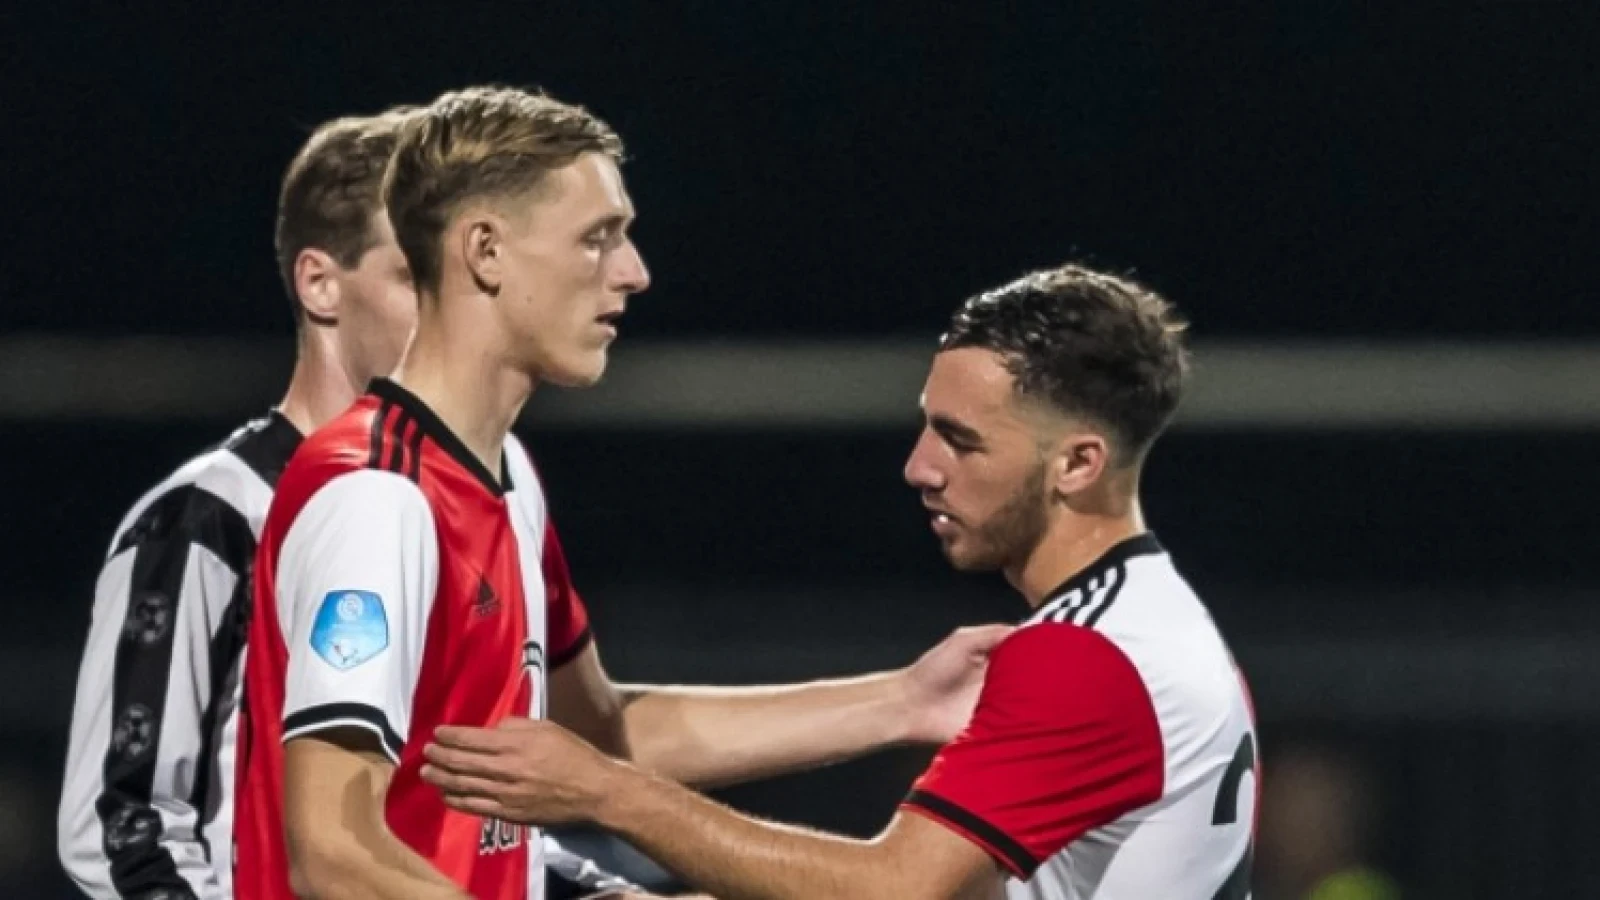 TERUGBLIK #5 | Feyenoord bekert door ten koste van VV Gemert, maar verliest Klassieker